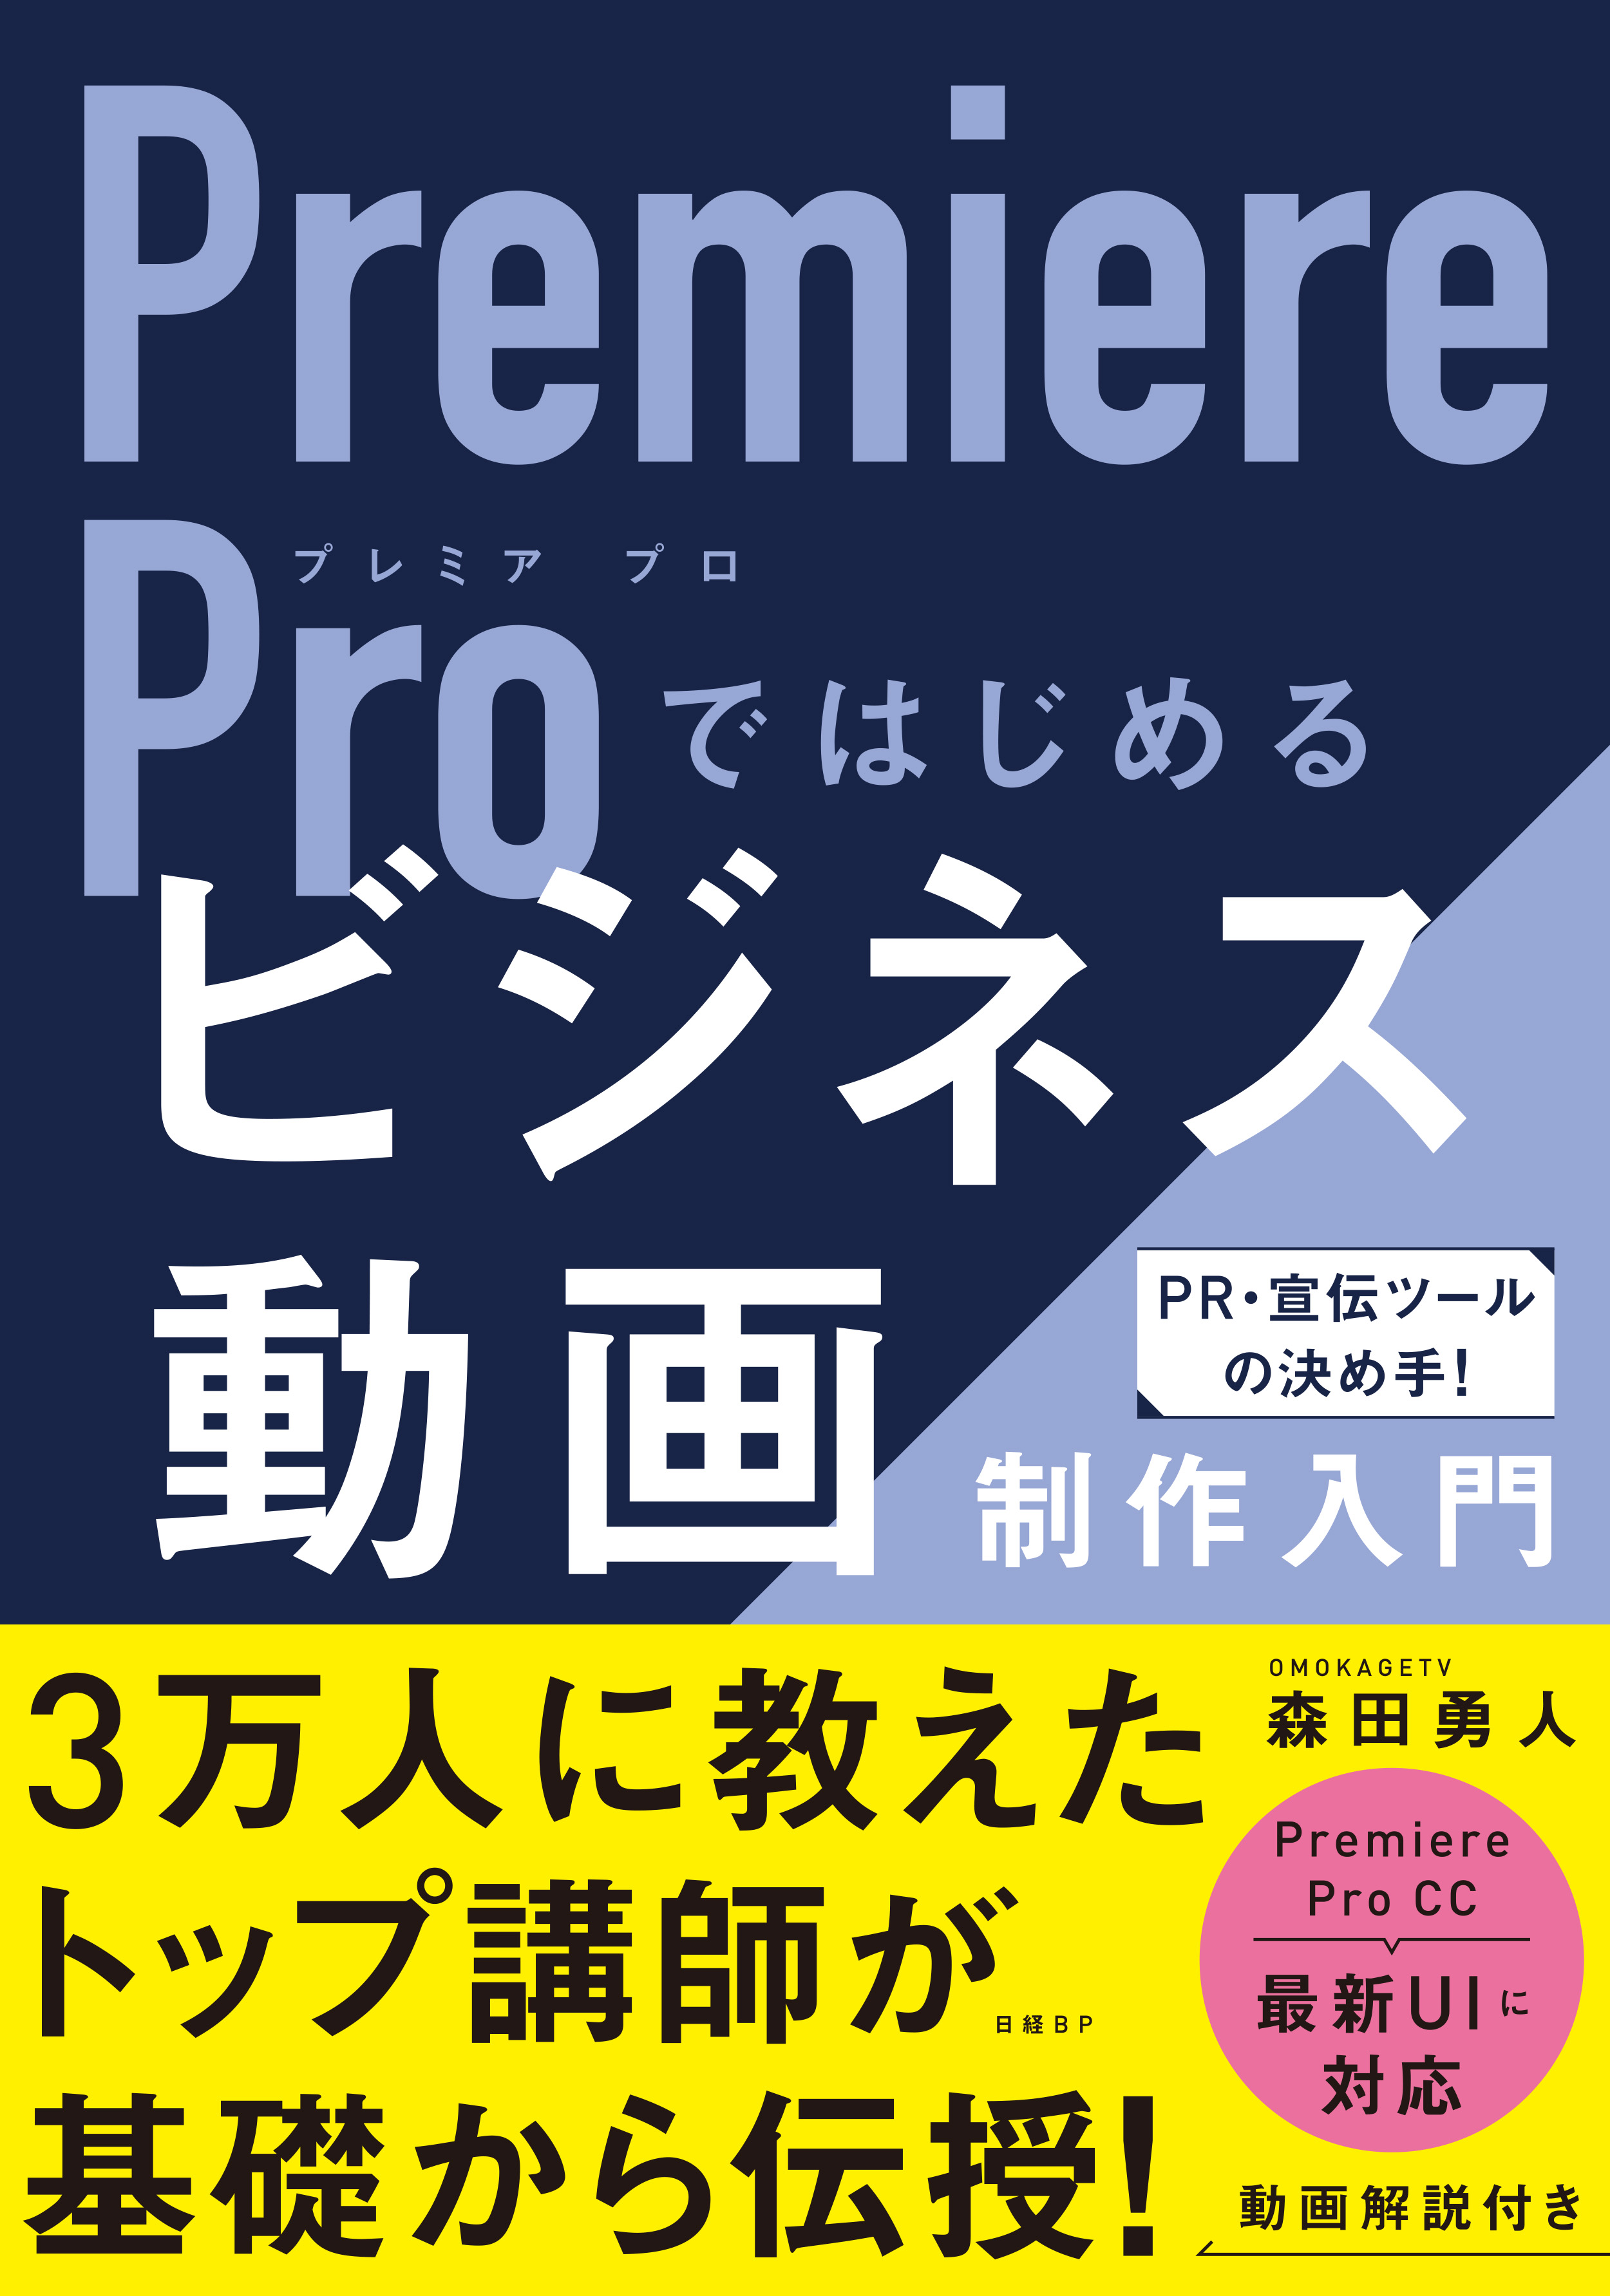 Premiere Proではじめるビジネス動画制作入門のお知らせ